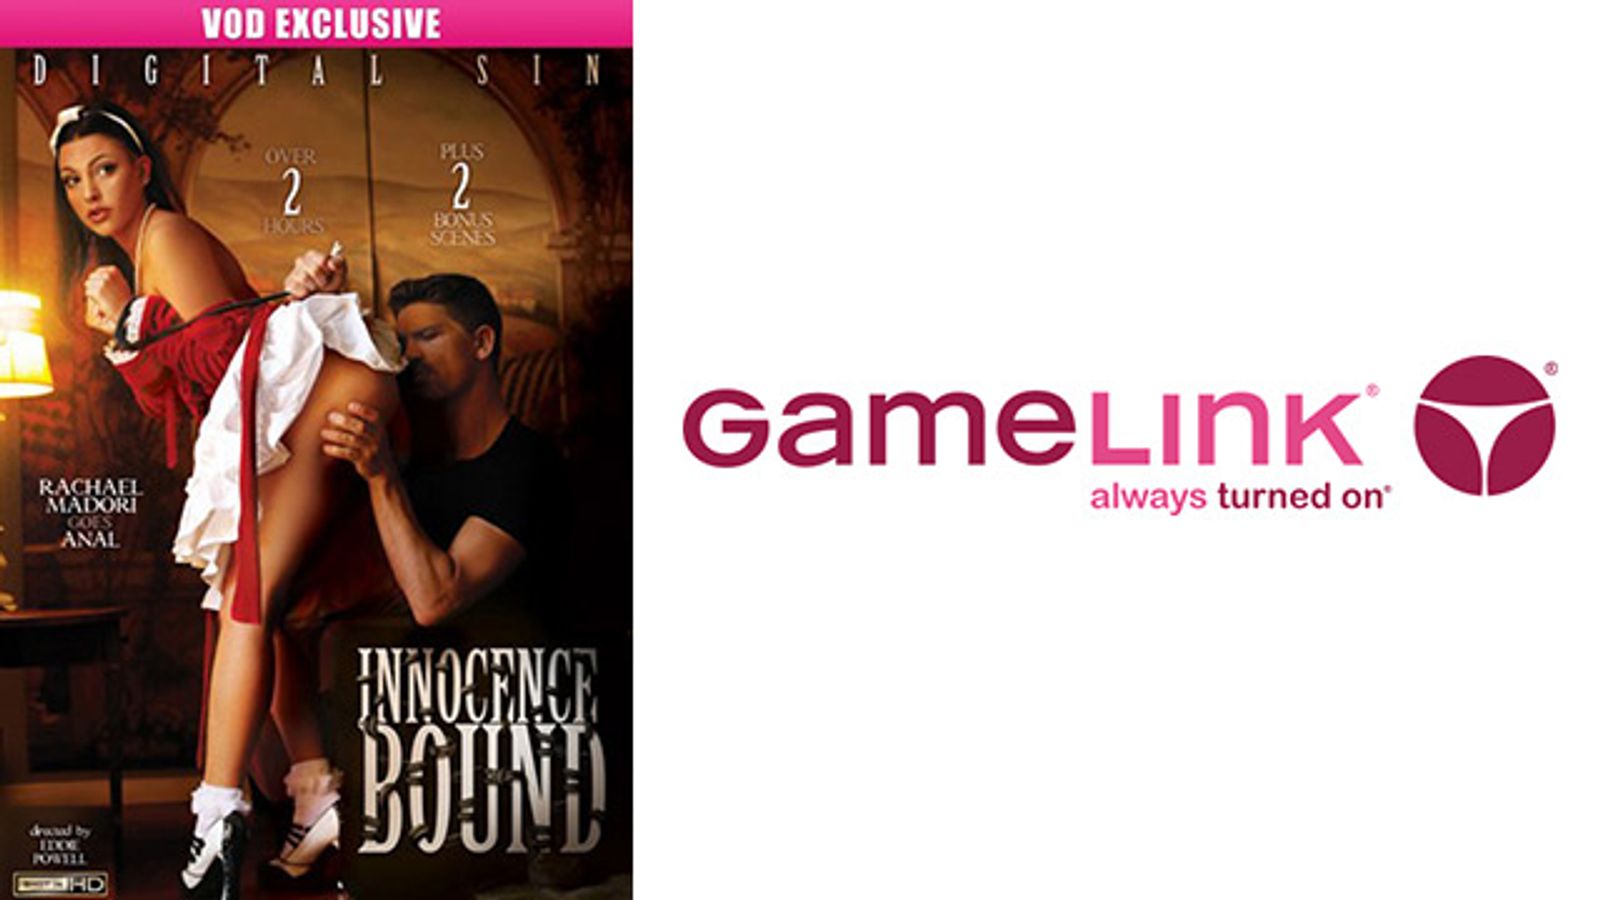 GameLink Exclusively Premieres Digital Sin’s ‘Innocence Bound’